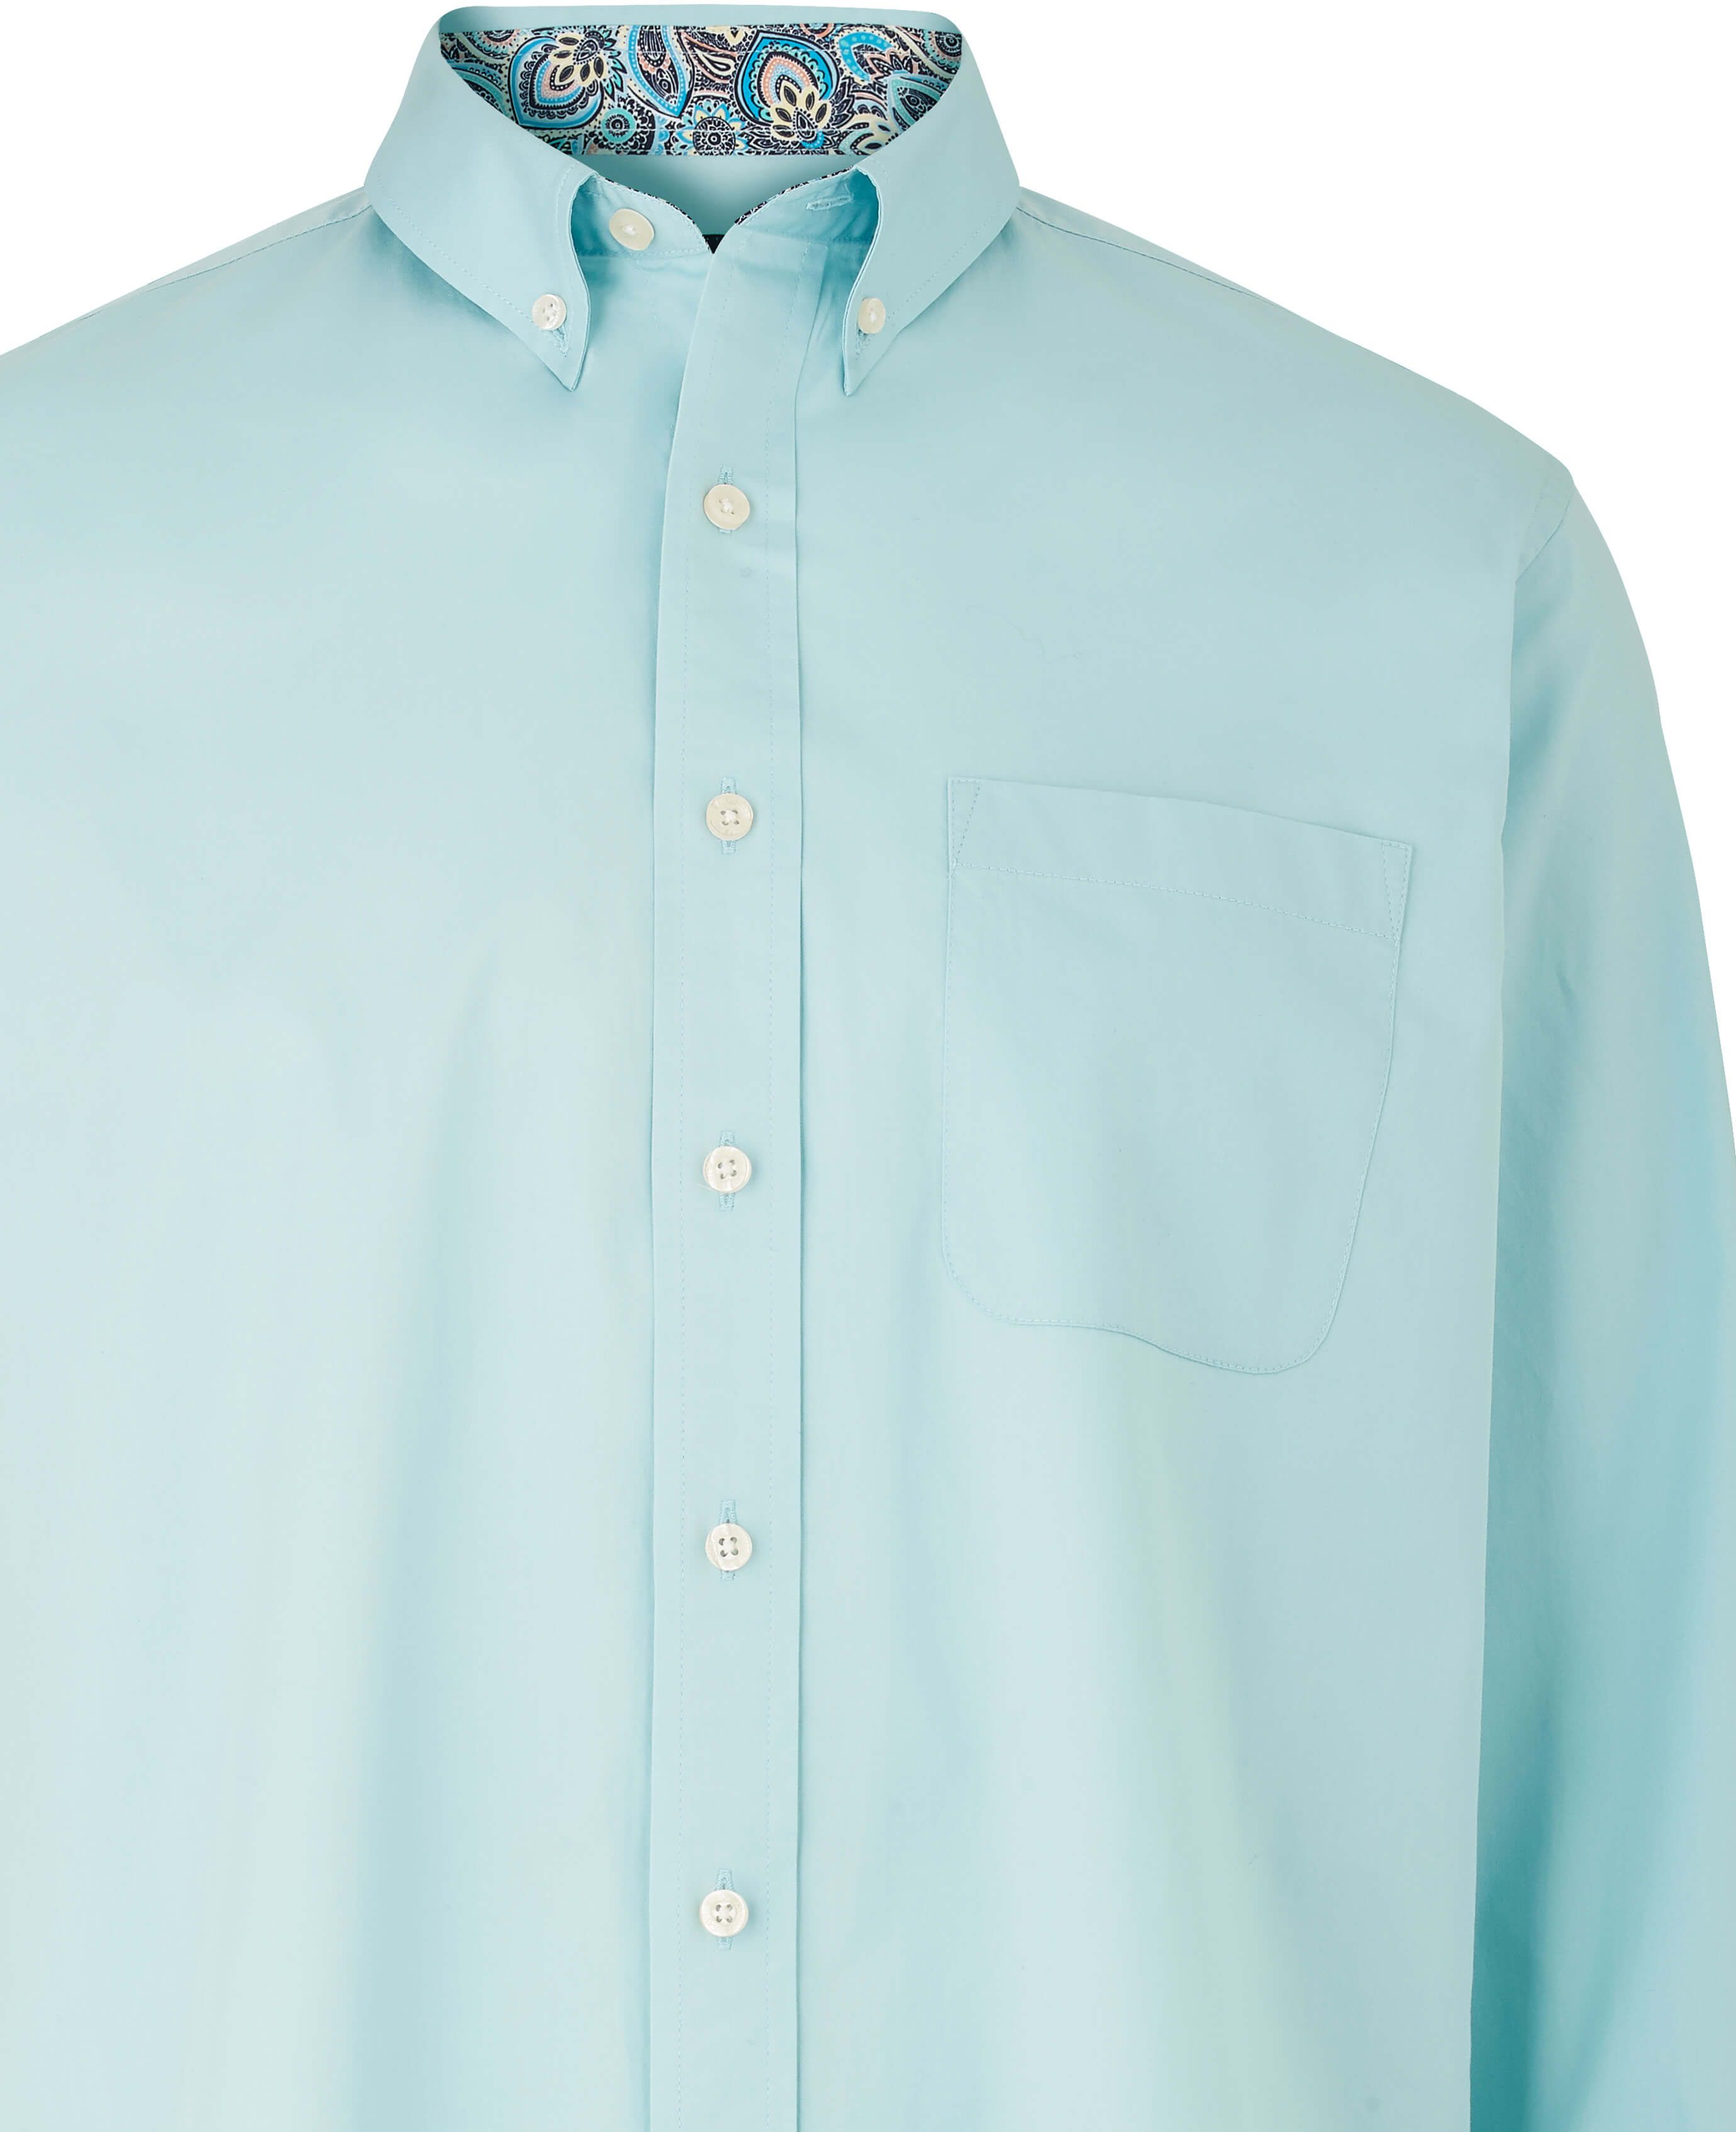 Men’s aqua blue cotton twill shirt with button-down collar | Savile Row Co